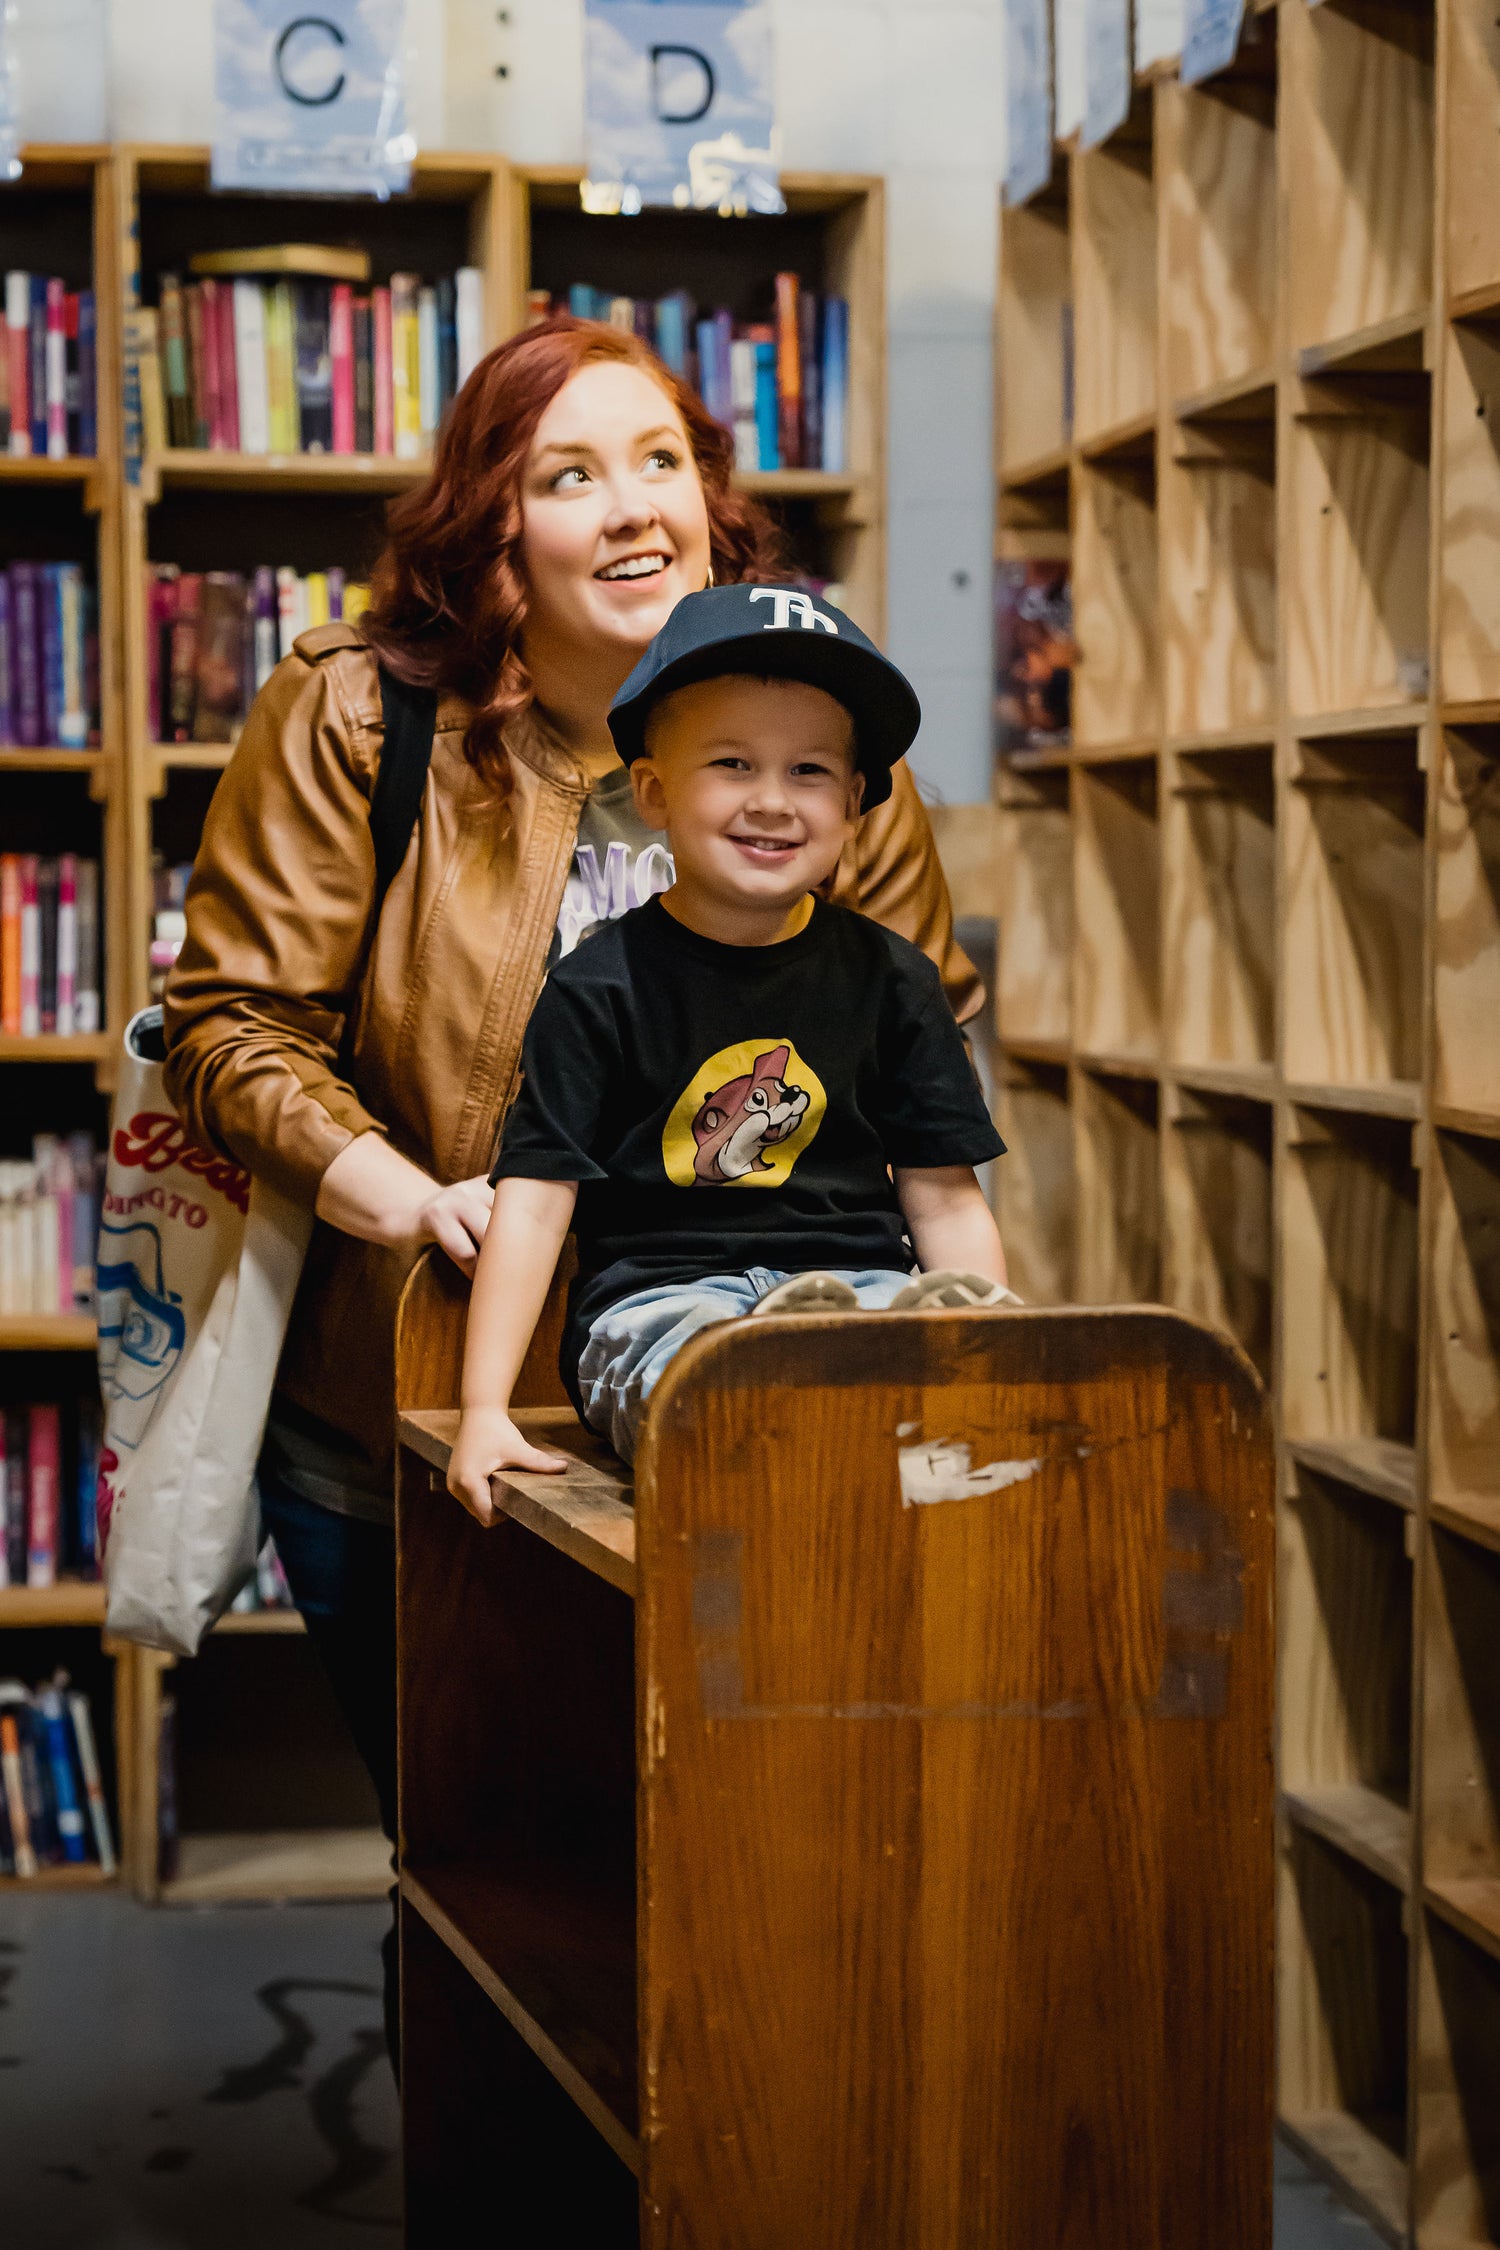 woman pushing smiling little boy through aisles of books